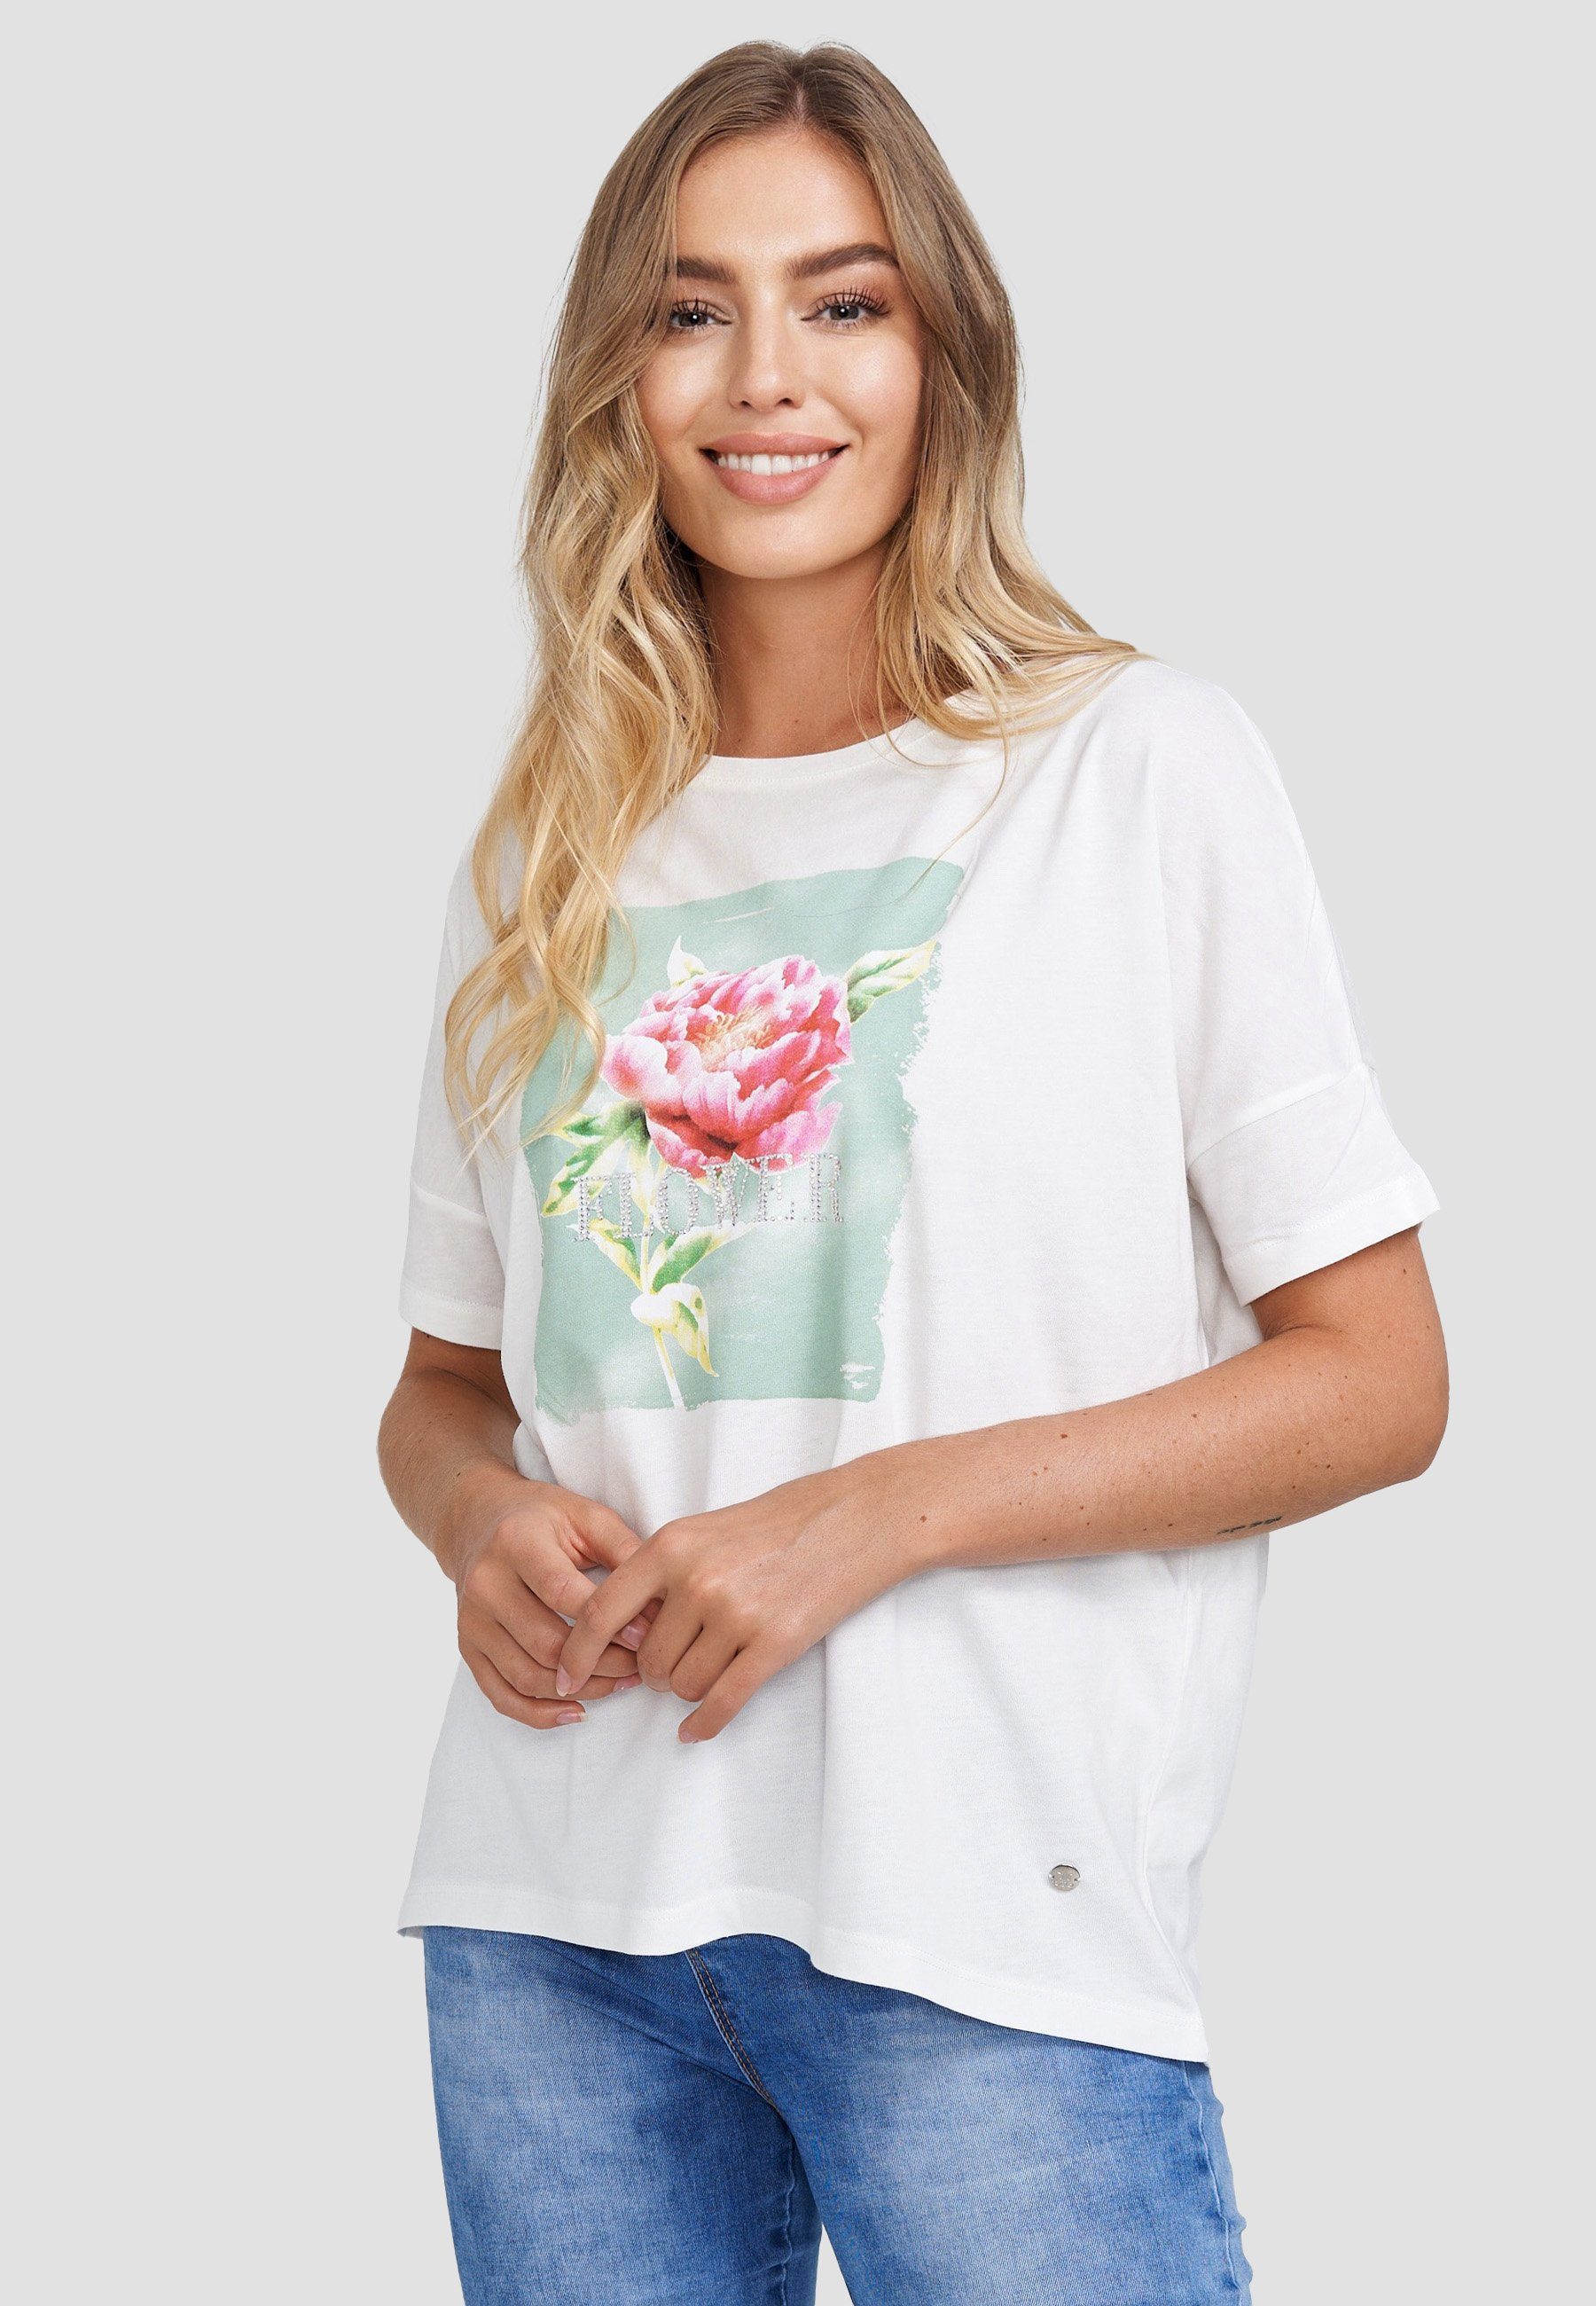 Blumen-Print Decay femininem mit T-Shirt